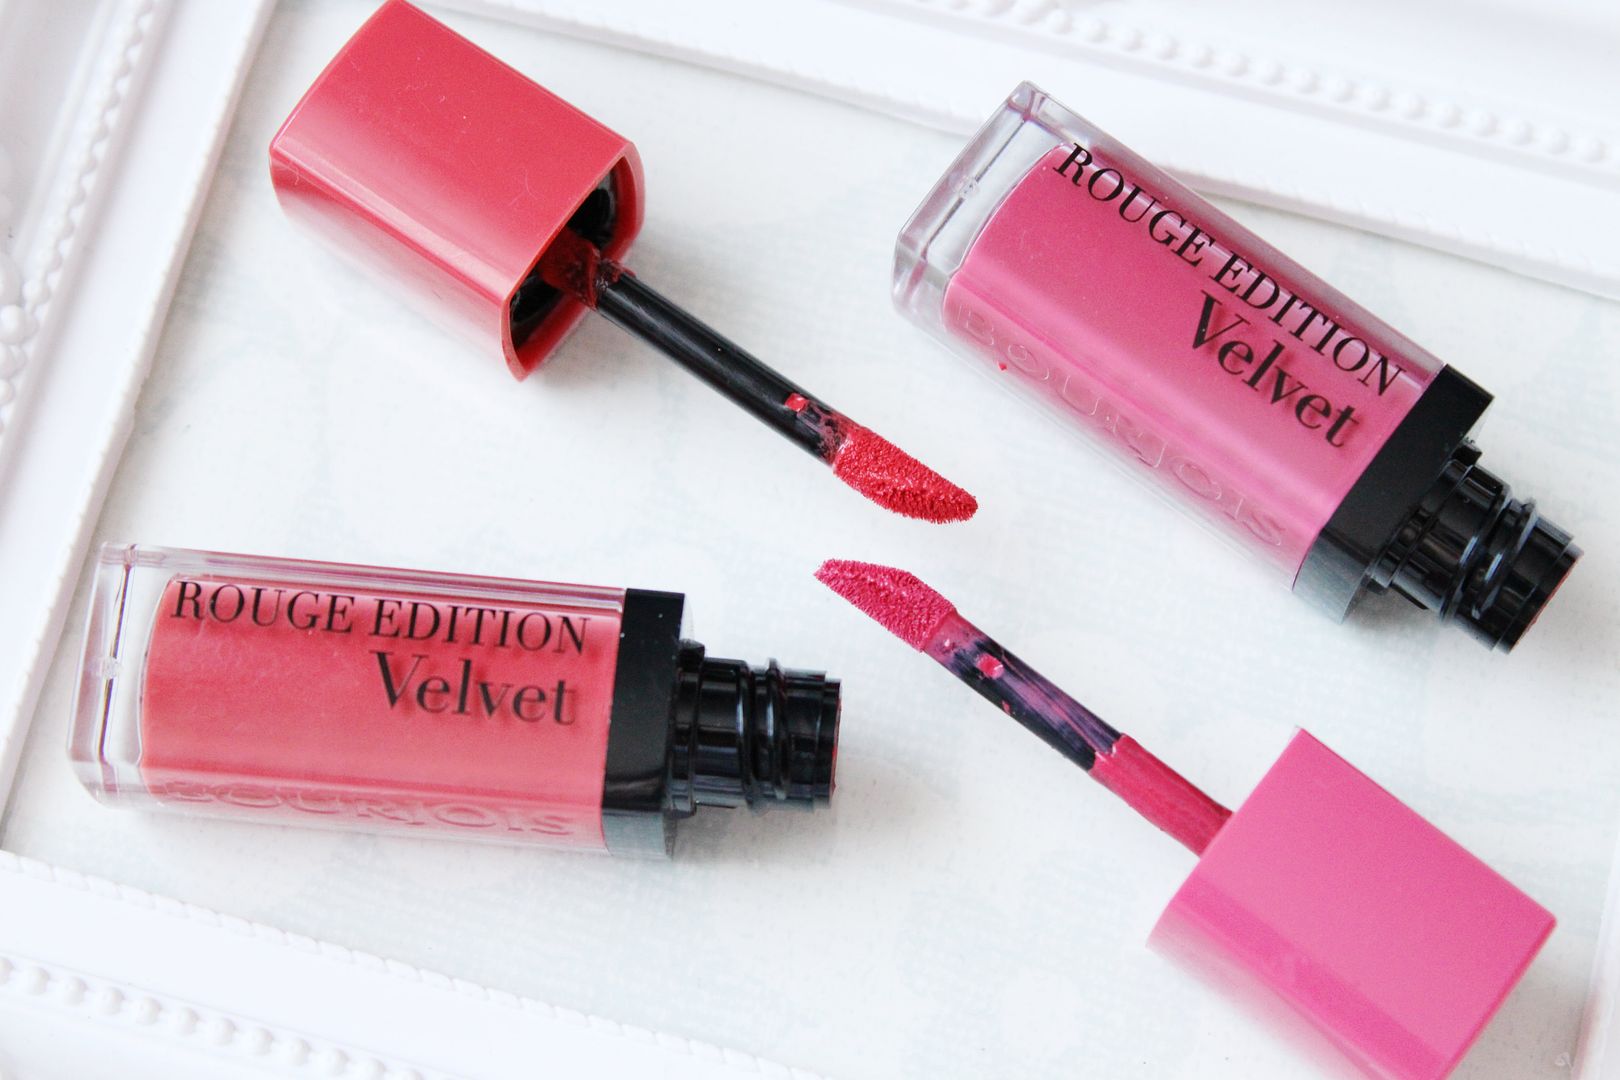 Bourjois-Rouge-Edition-Velvet-Lipstick-Lip-Lacquers-Peach-Club-So-Hap'pink-Packaging-Applicator-Belle-Amie-UK-Beauty-Fashion-Lifestyle-Blog